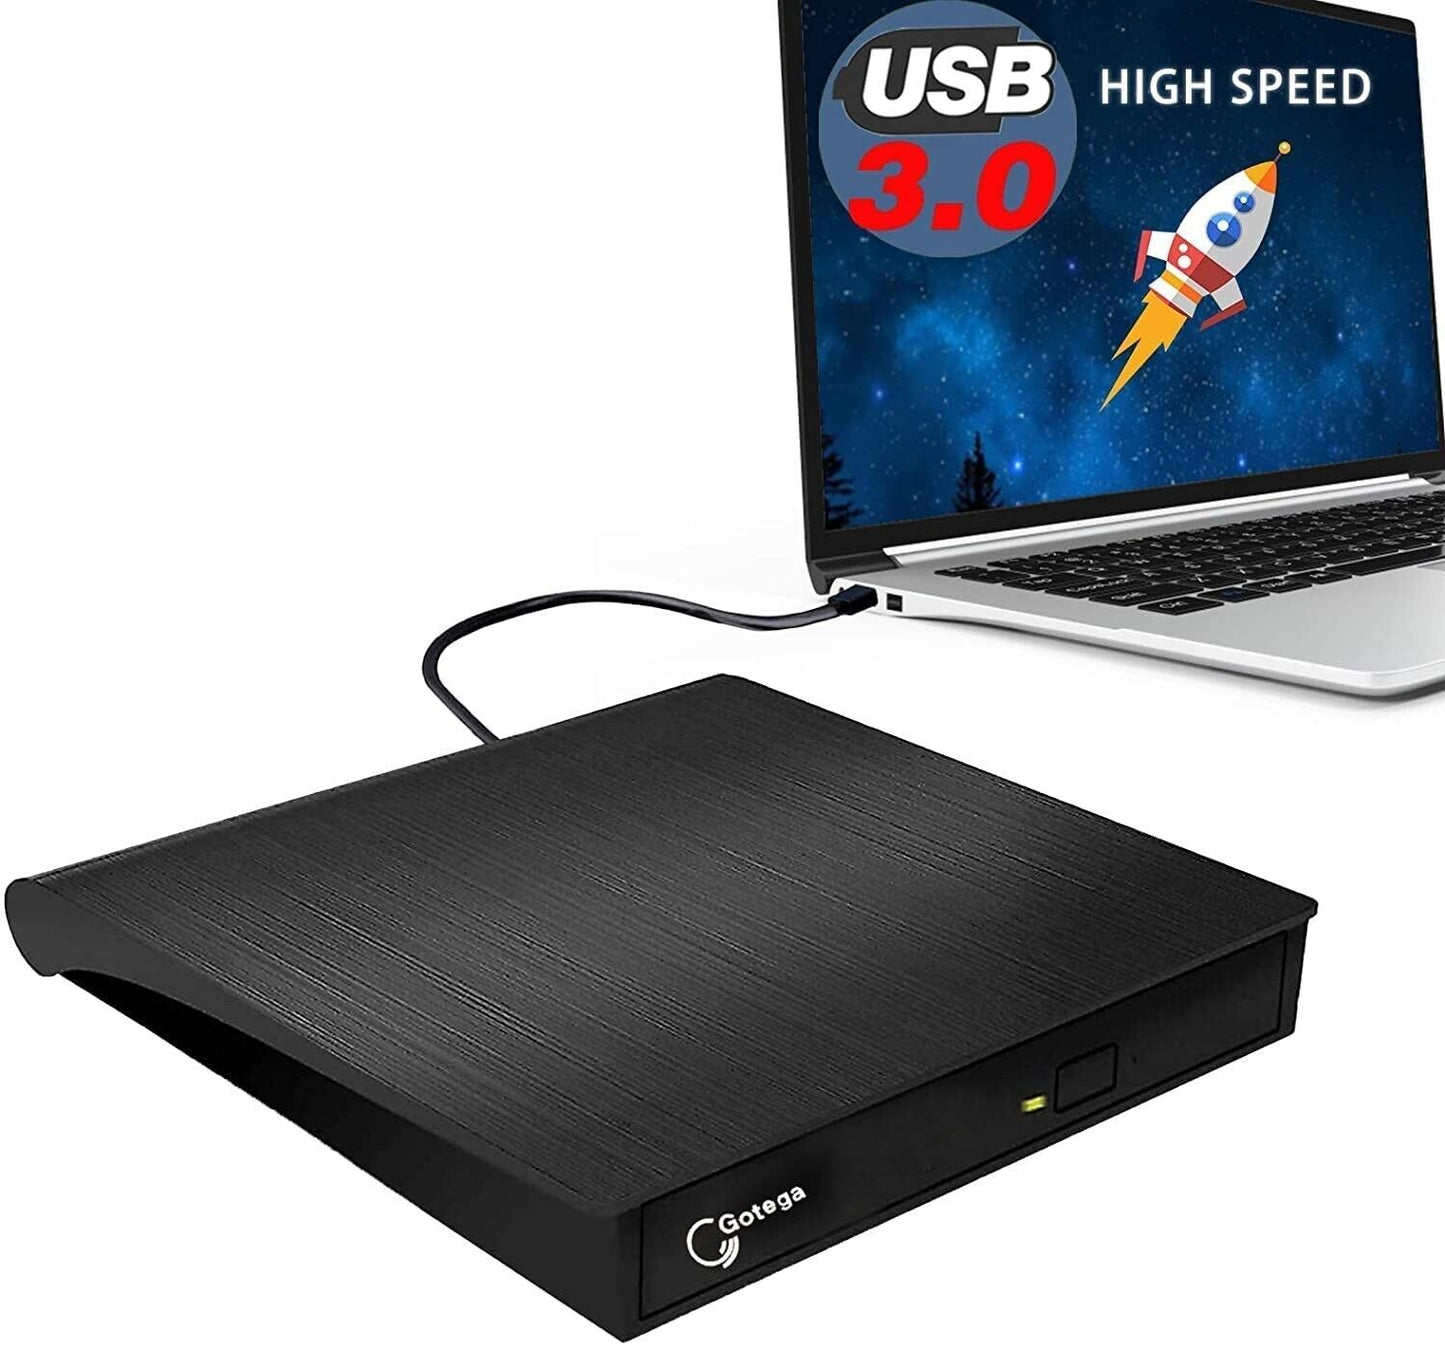 Gotega USB 3.0 External DVD Drive +/-RW for PC, Mac, Linux - Portable DVD/CD